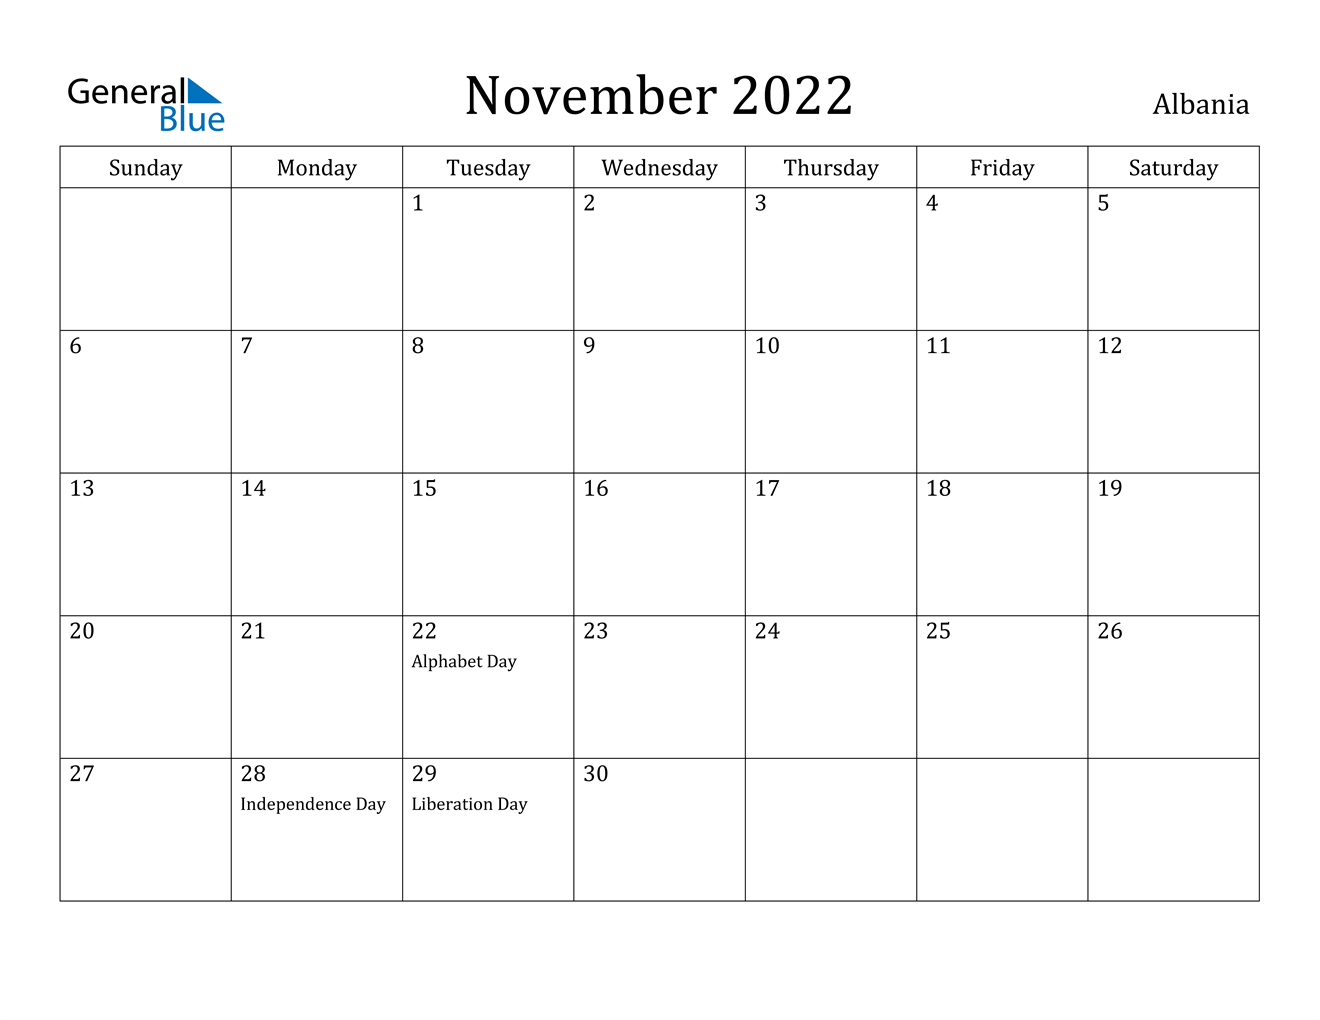 November 2022 Calendar - Albania